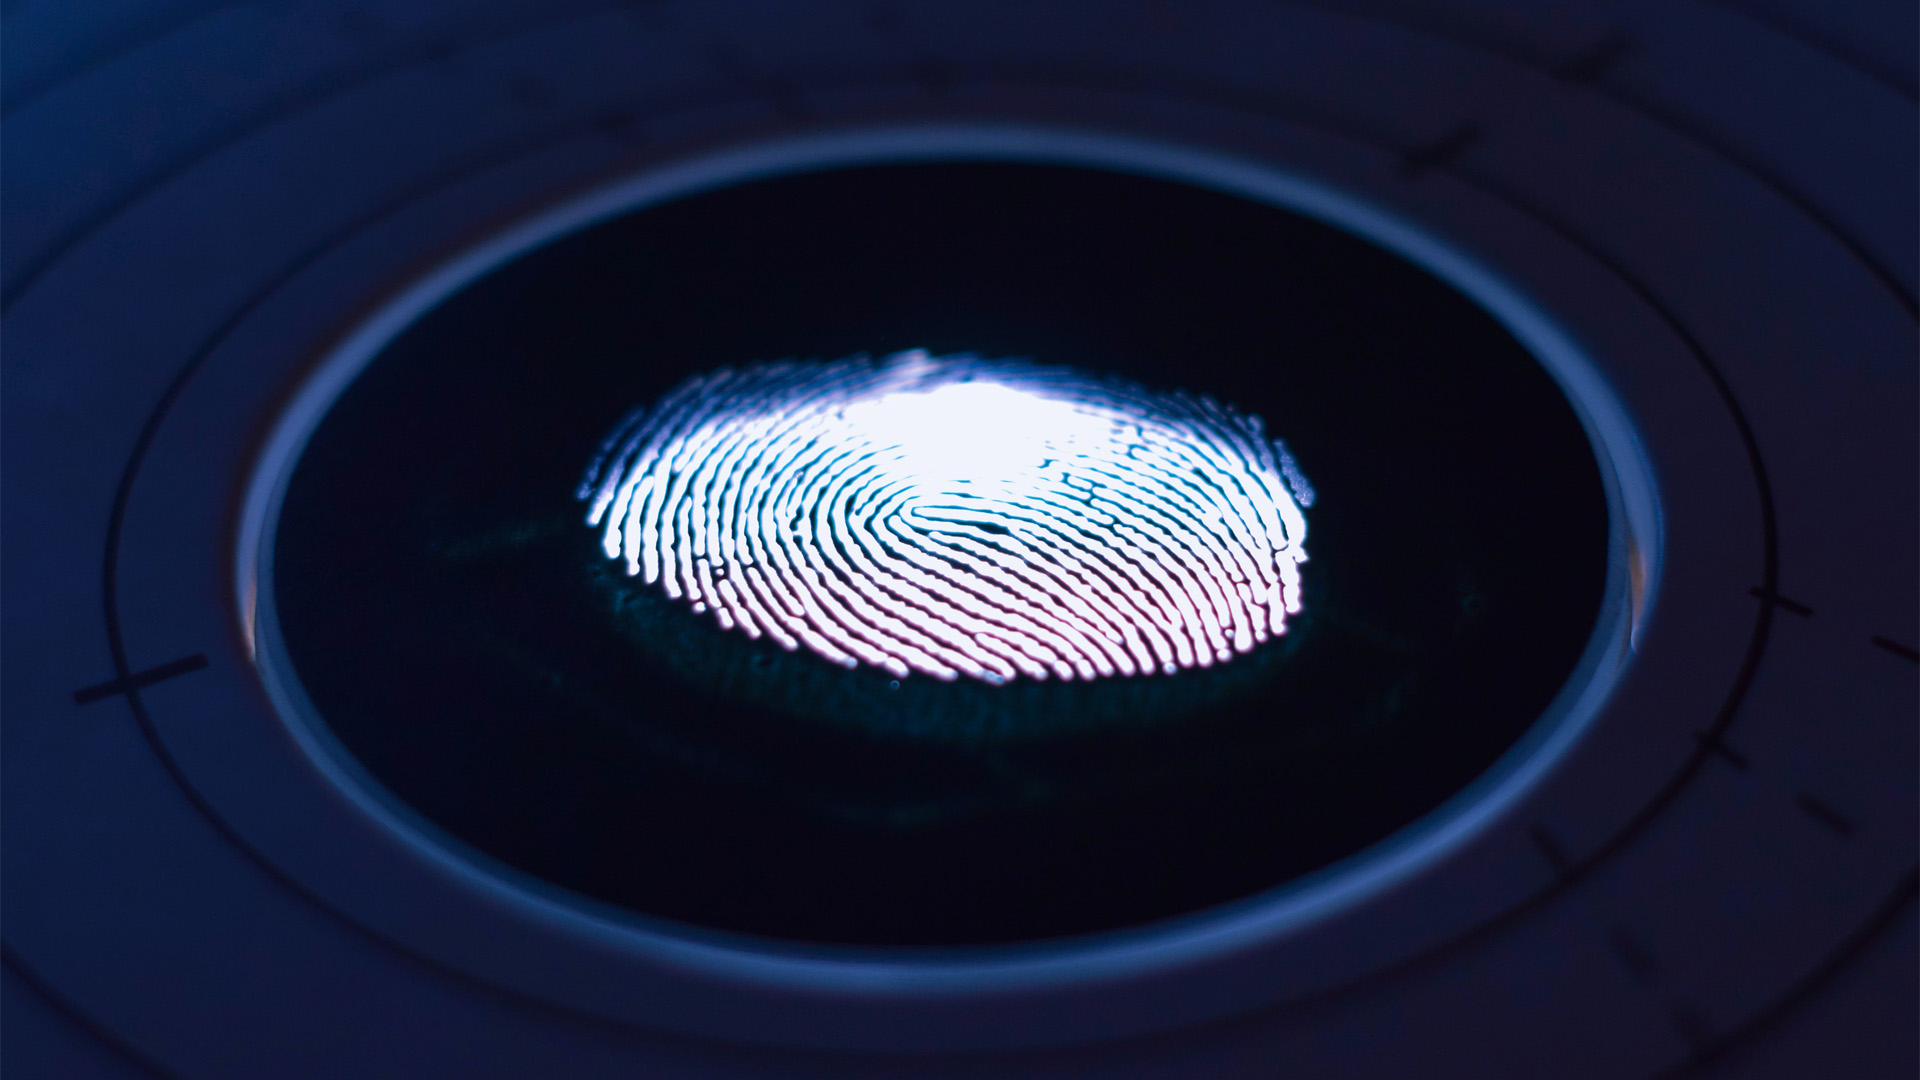 decorative: image of a fingerprint on a screen